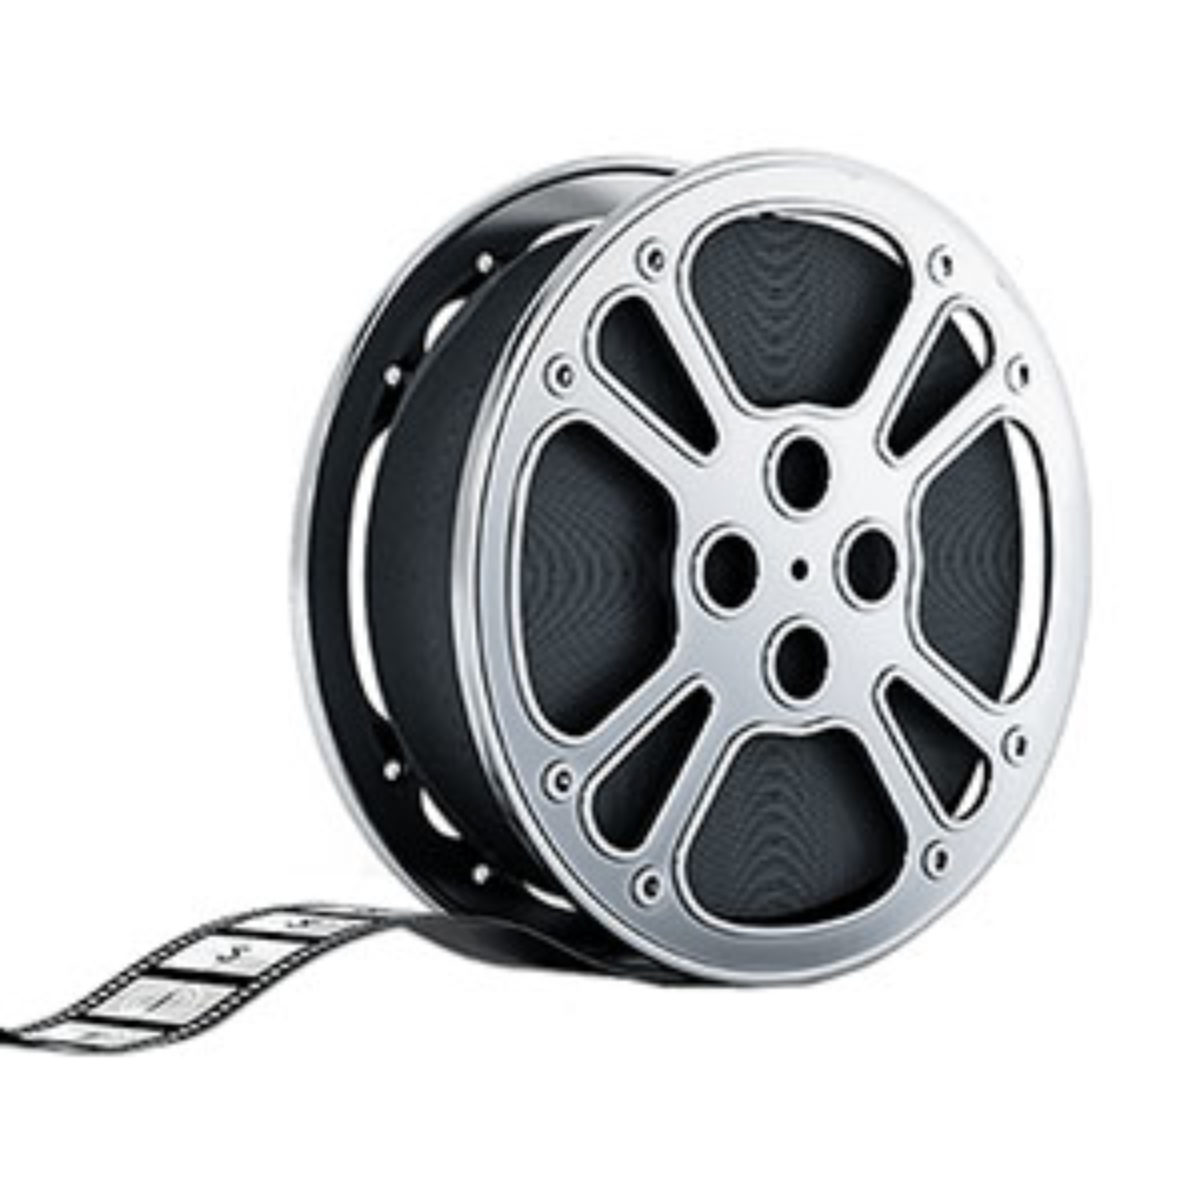 Super8 Film to DVD Transfer  Astound Video Minneapolis/St. Paul, MN